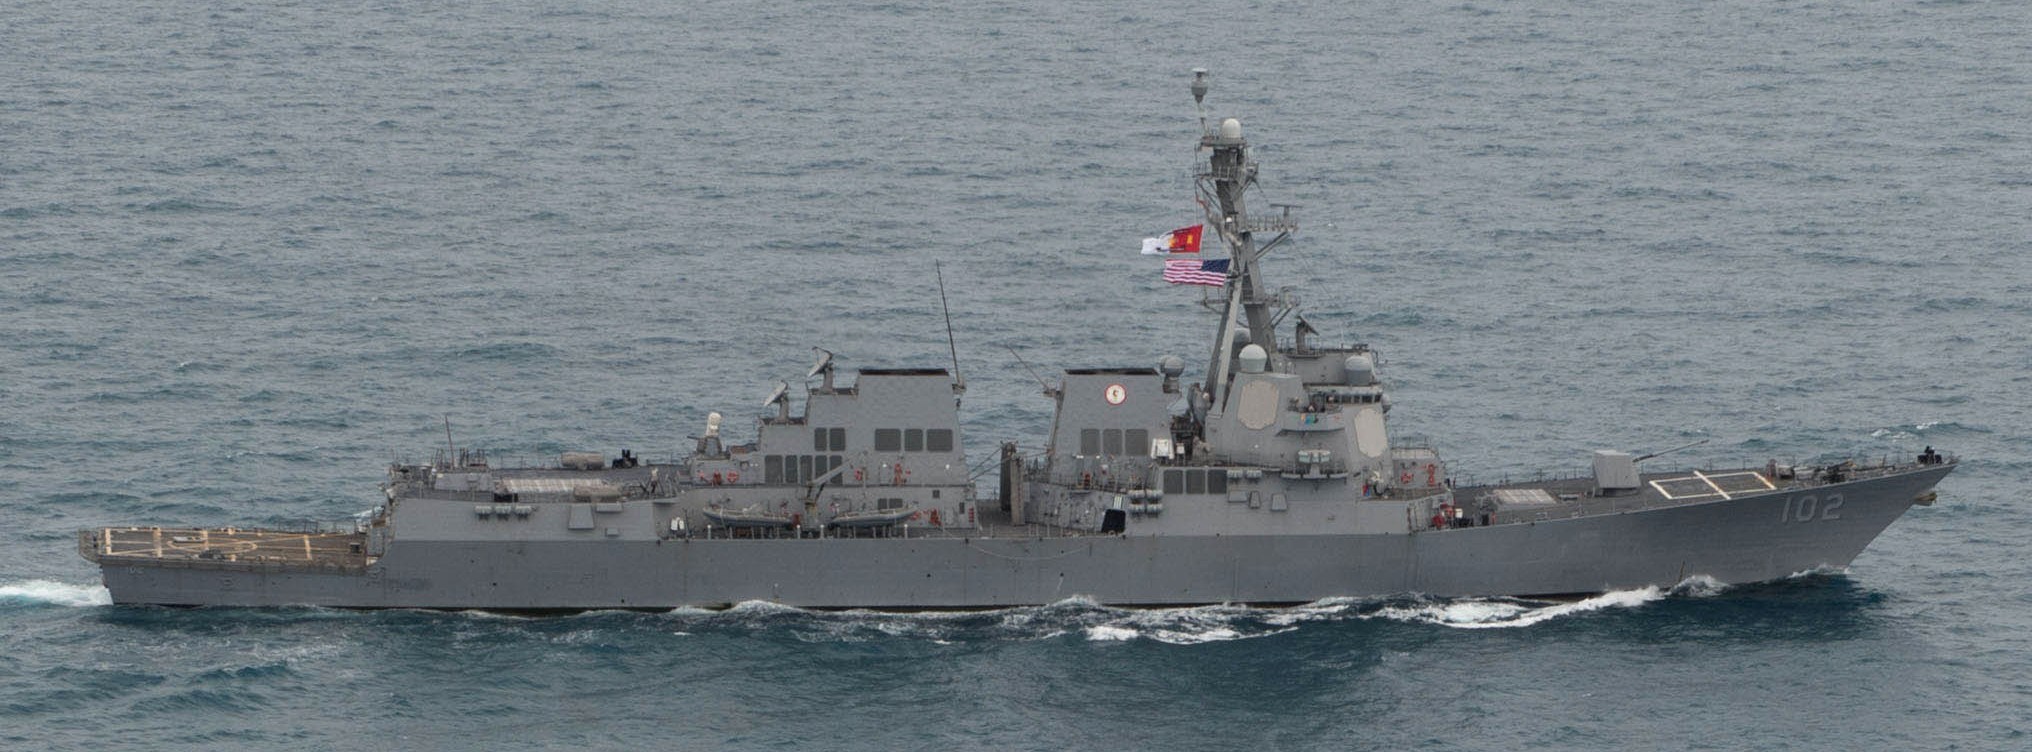 ddg-102 uss sampson guided missile destroyer 2015 13